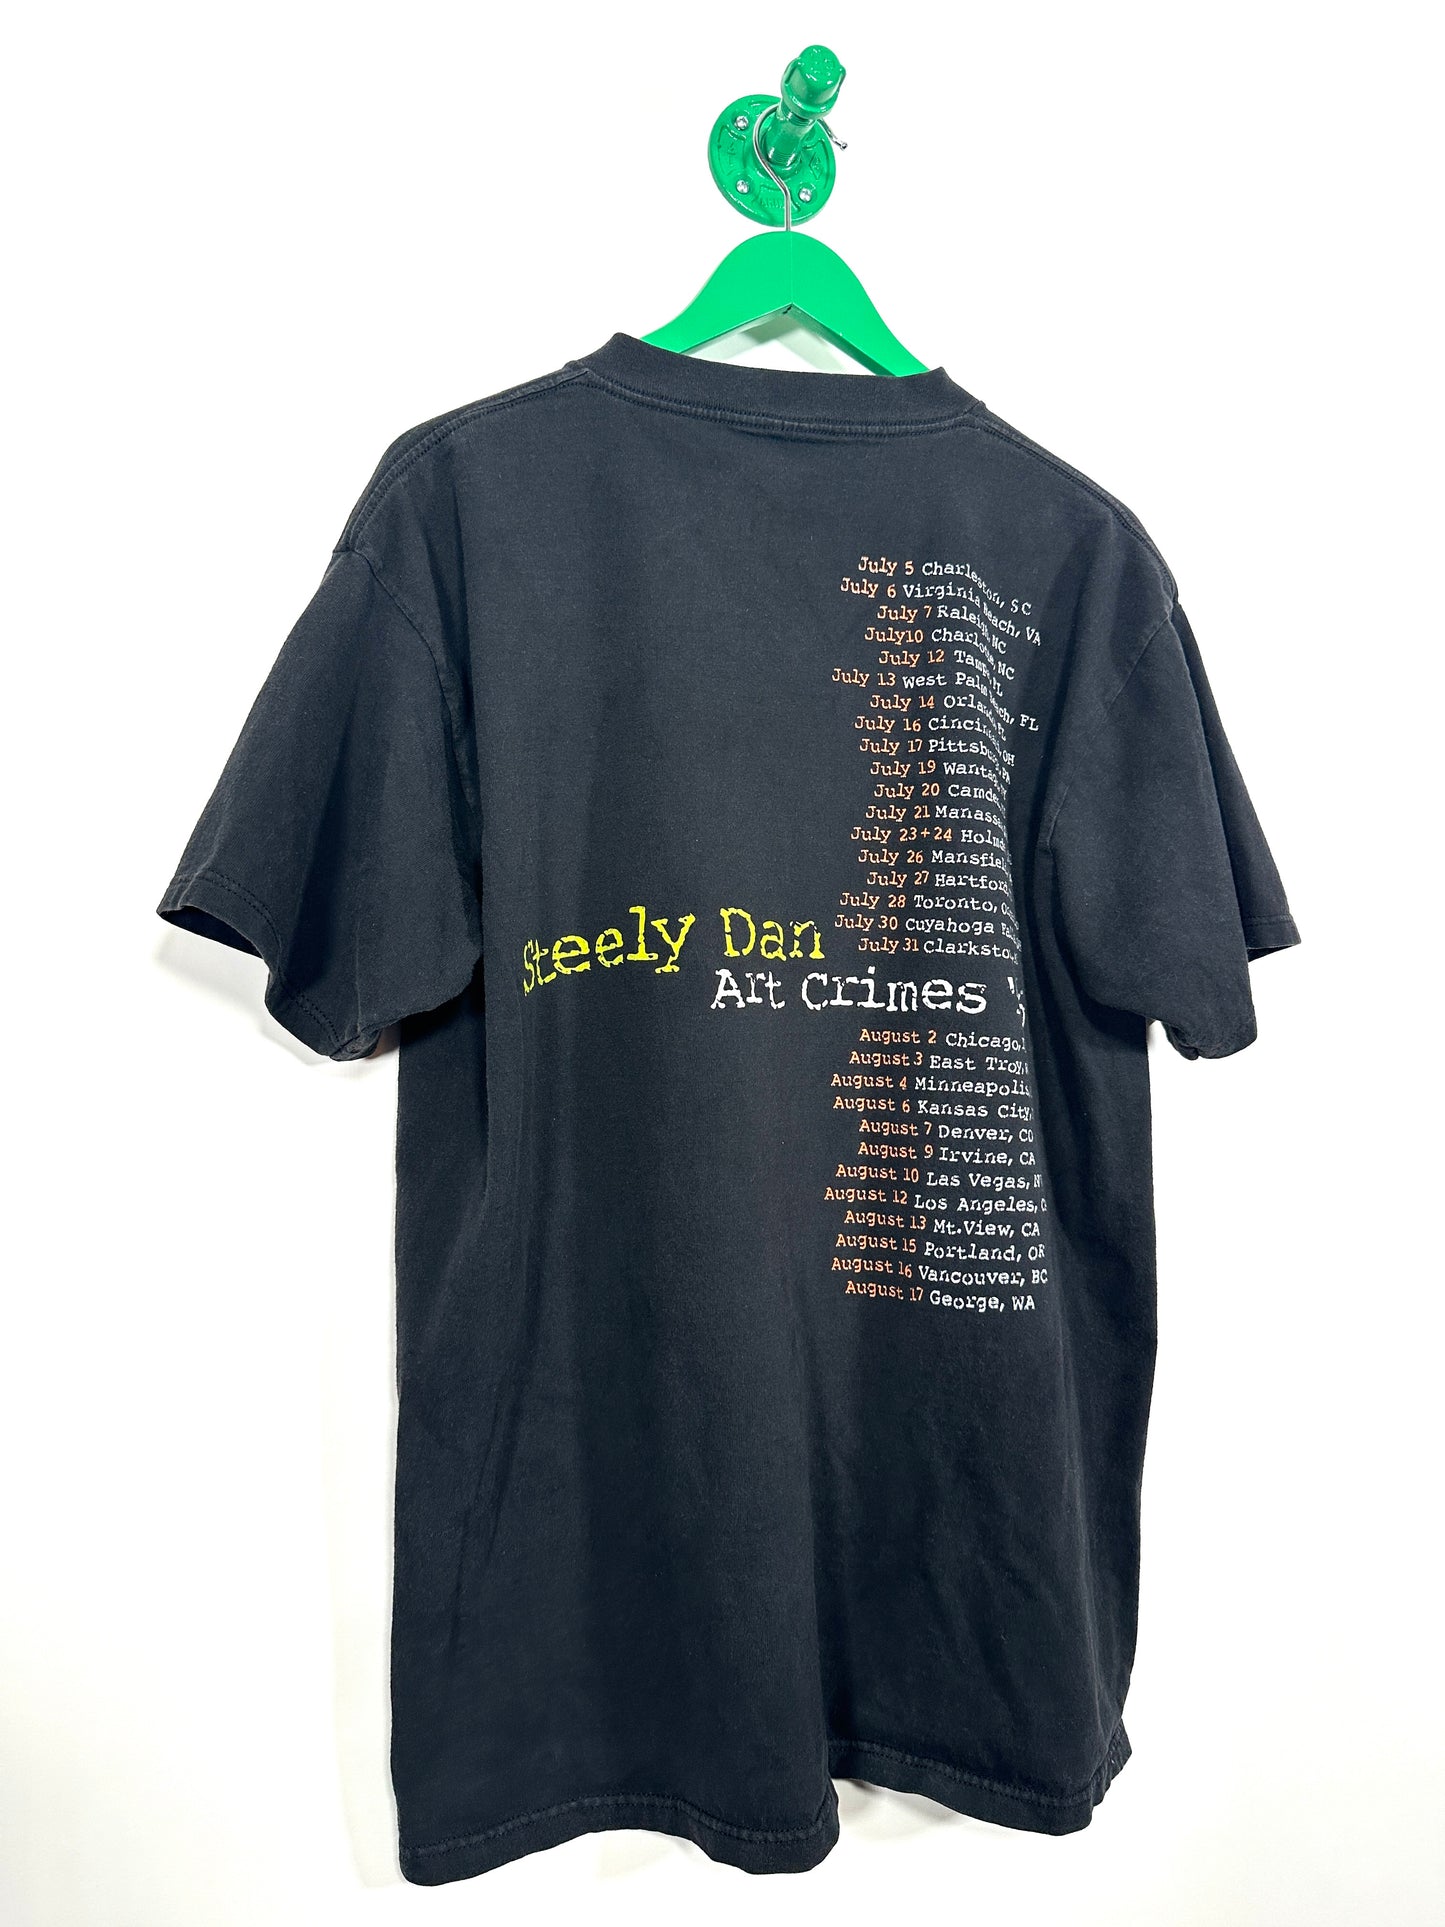 90s Steely Dan T Shirt - L